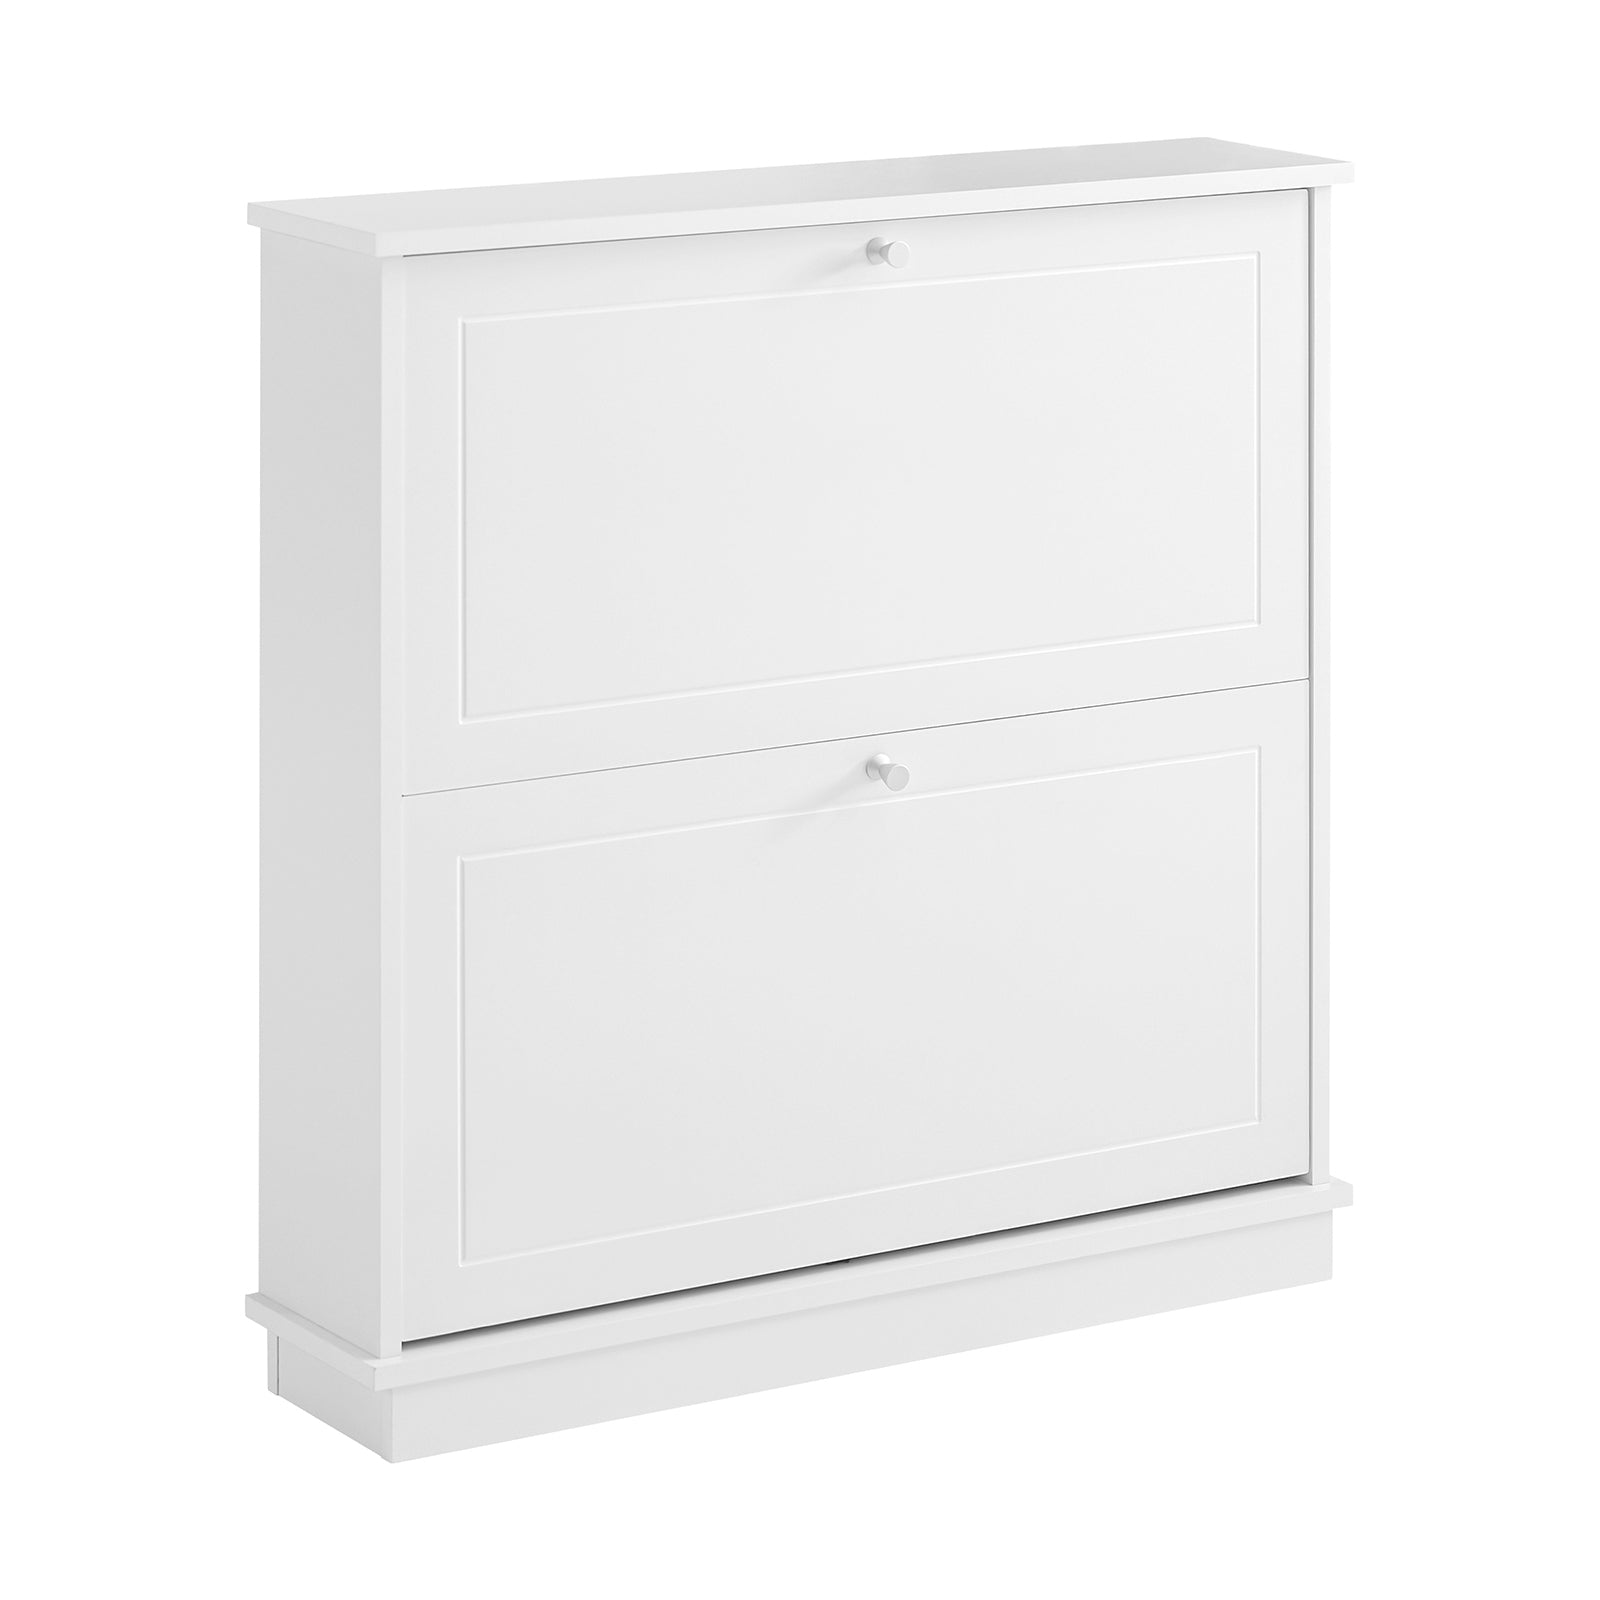  Haotian FSR99-W, White Shoe Cabinet with 2 Flip